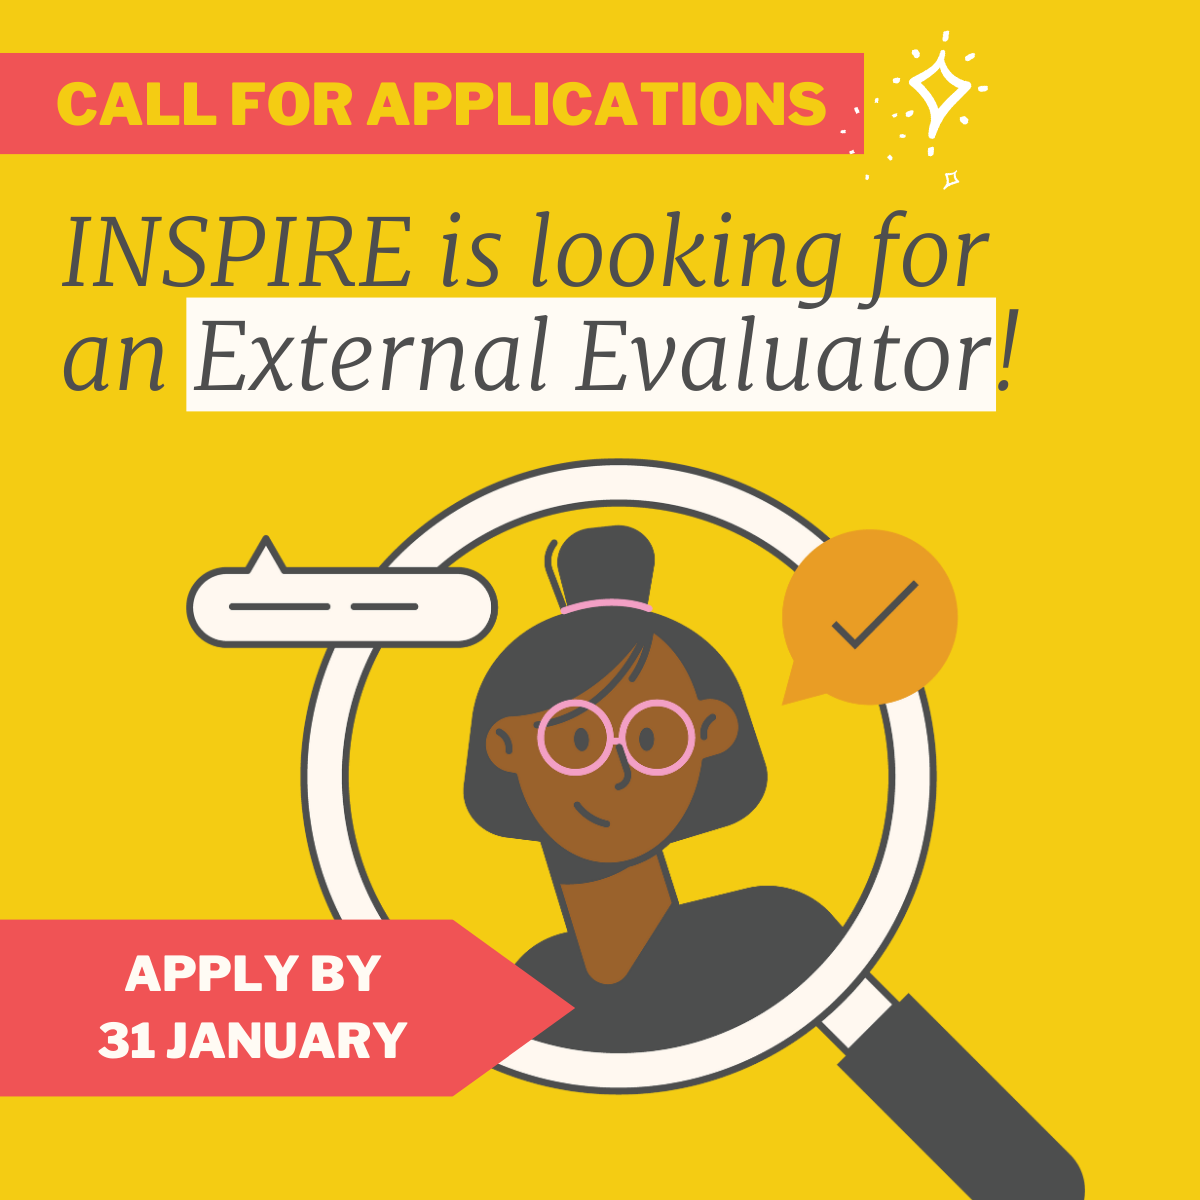 INSPIRE CfA External Evaluator